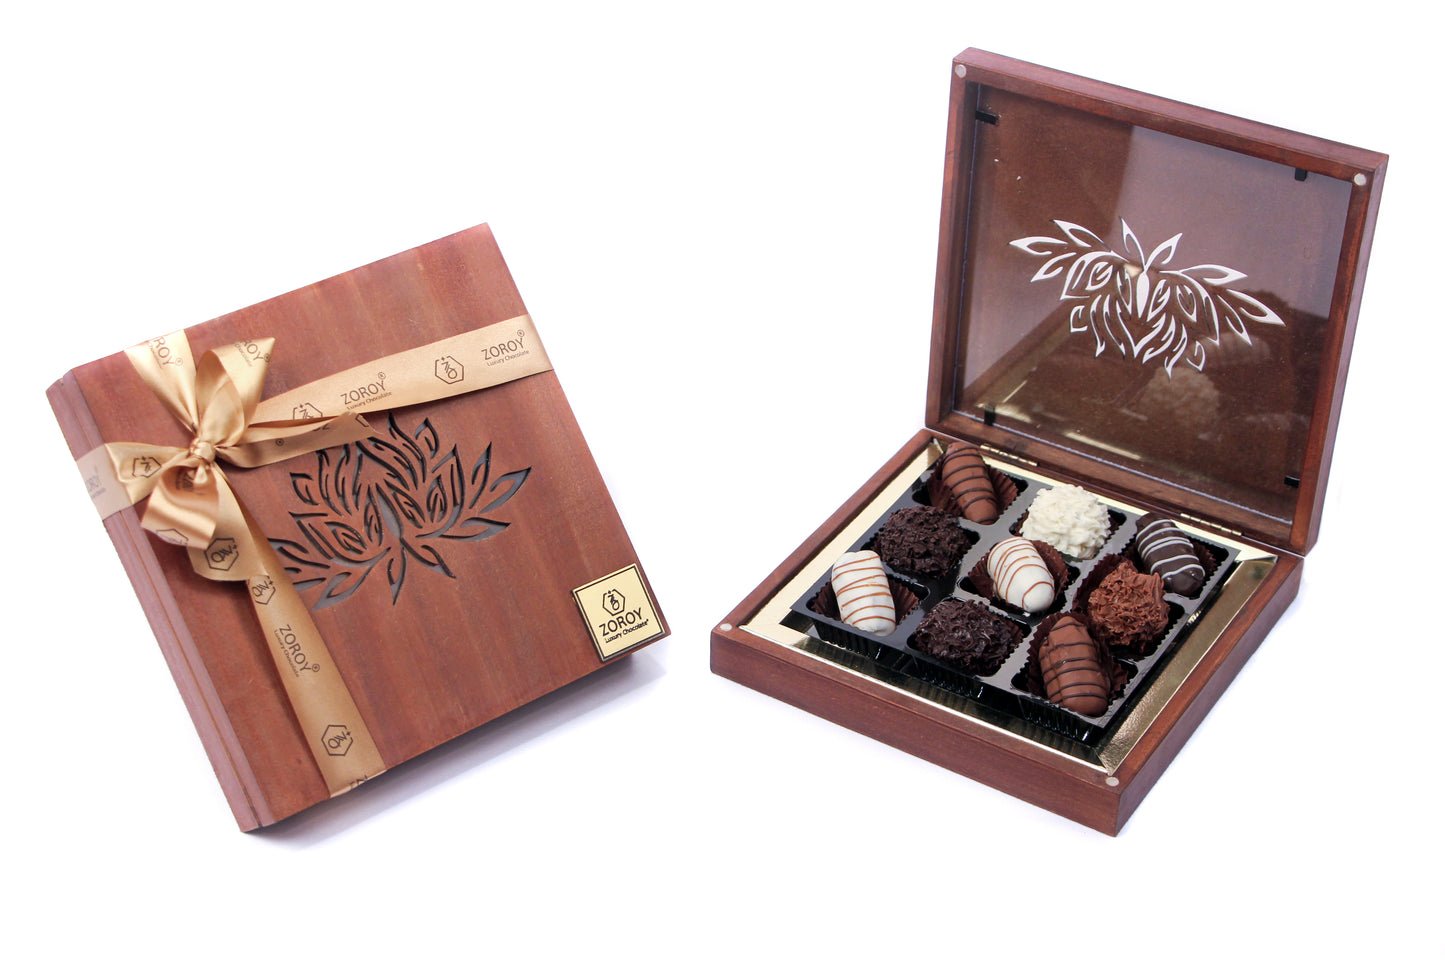 ZOROY EID & Ramadan Lotus Wood box with 9 Dates and Dry Fruit truffle chocolates Gift Box - 135 Gms